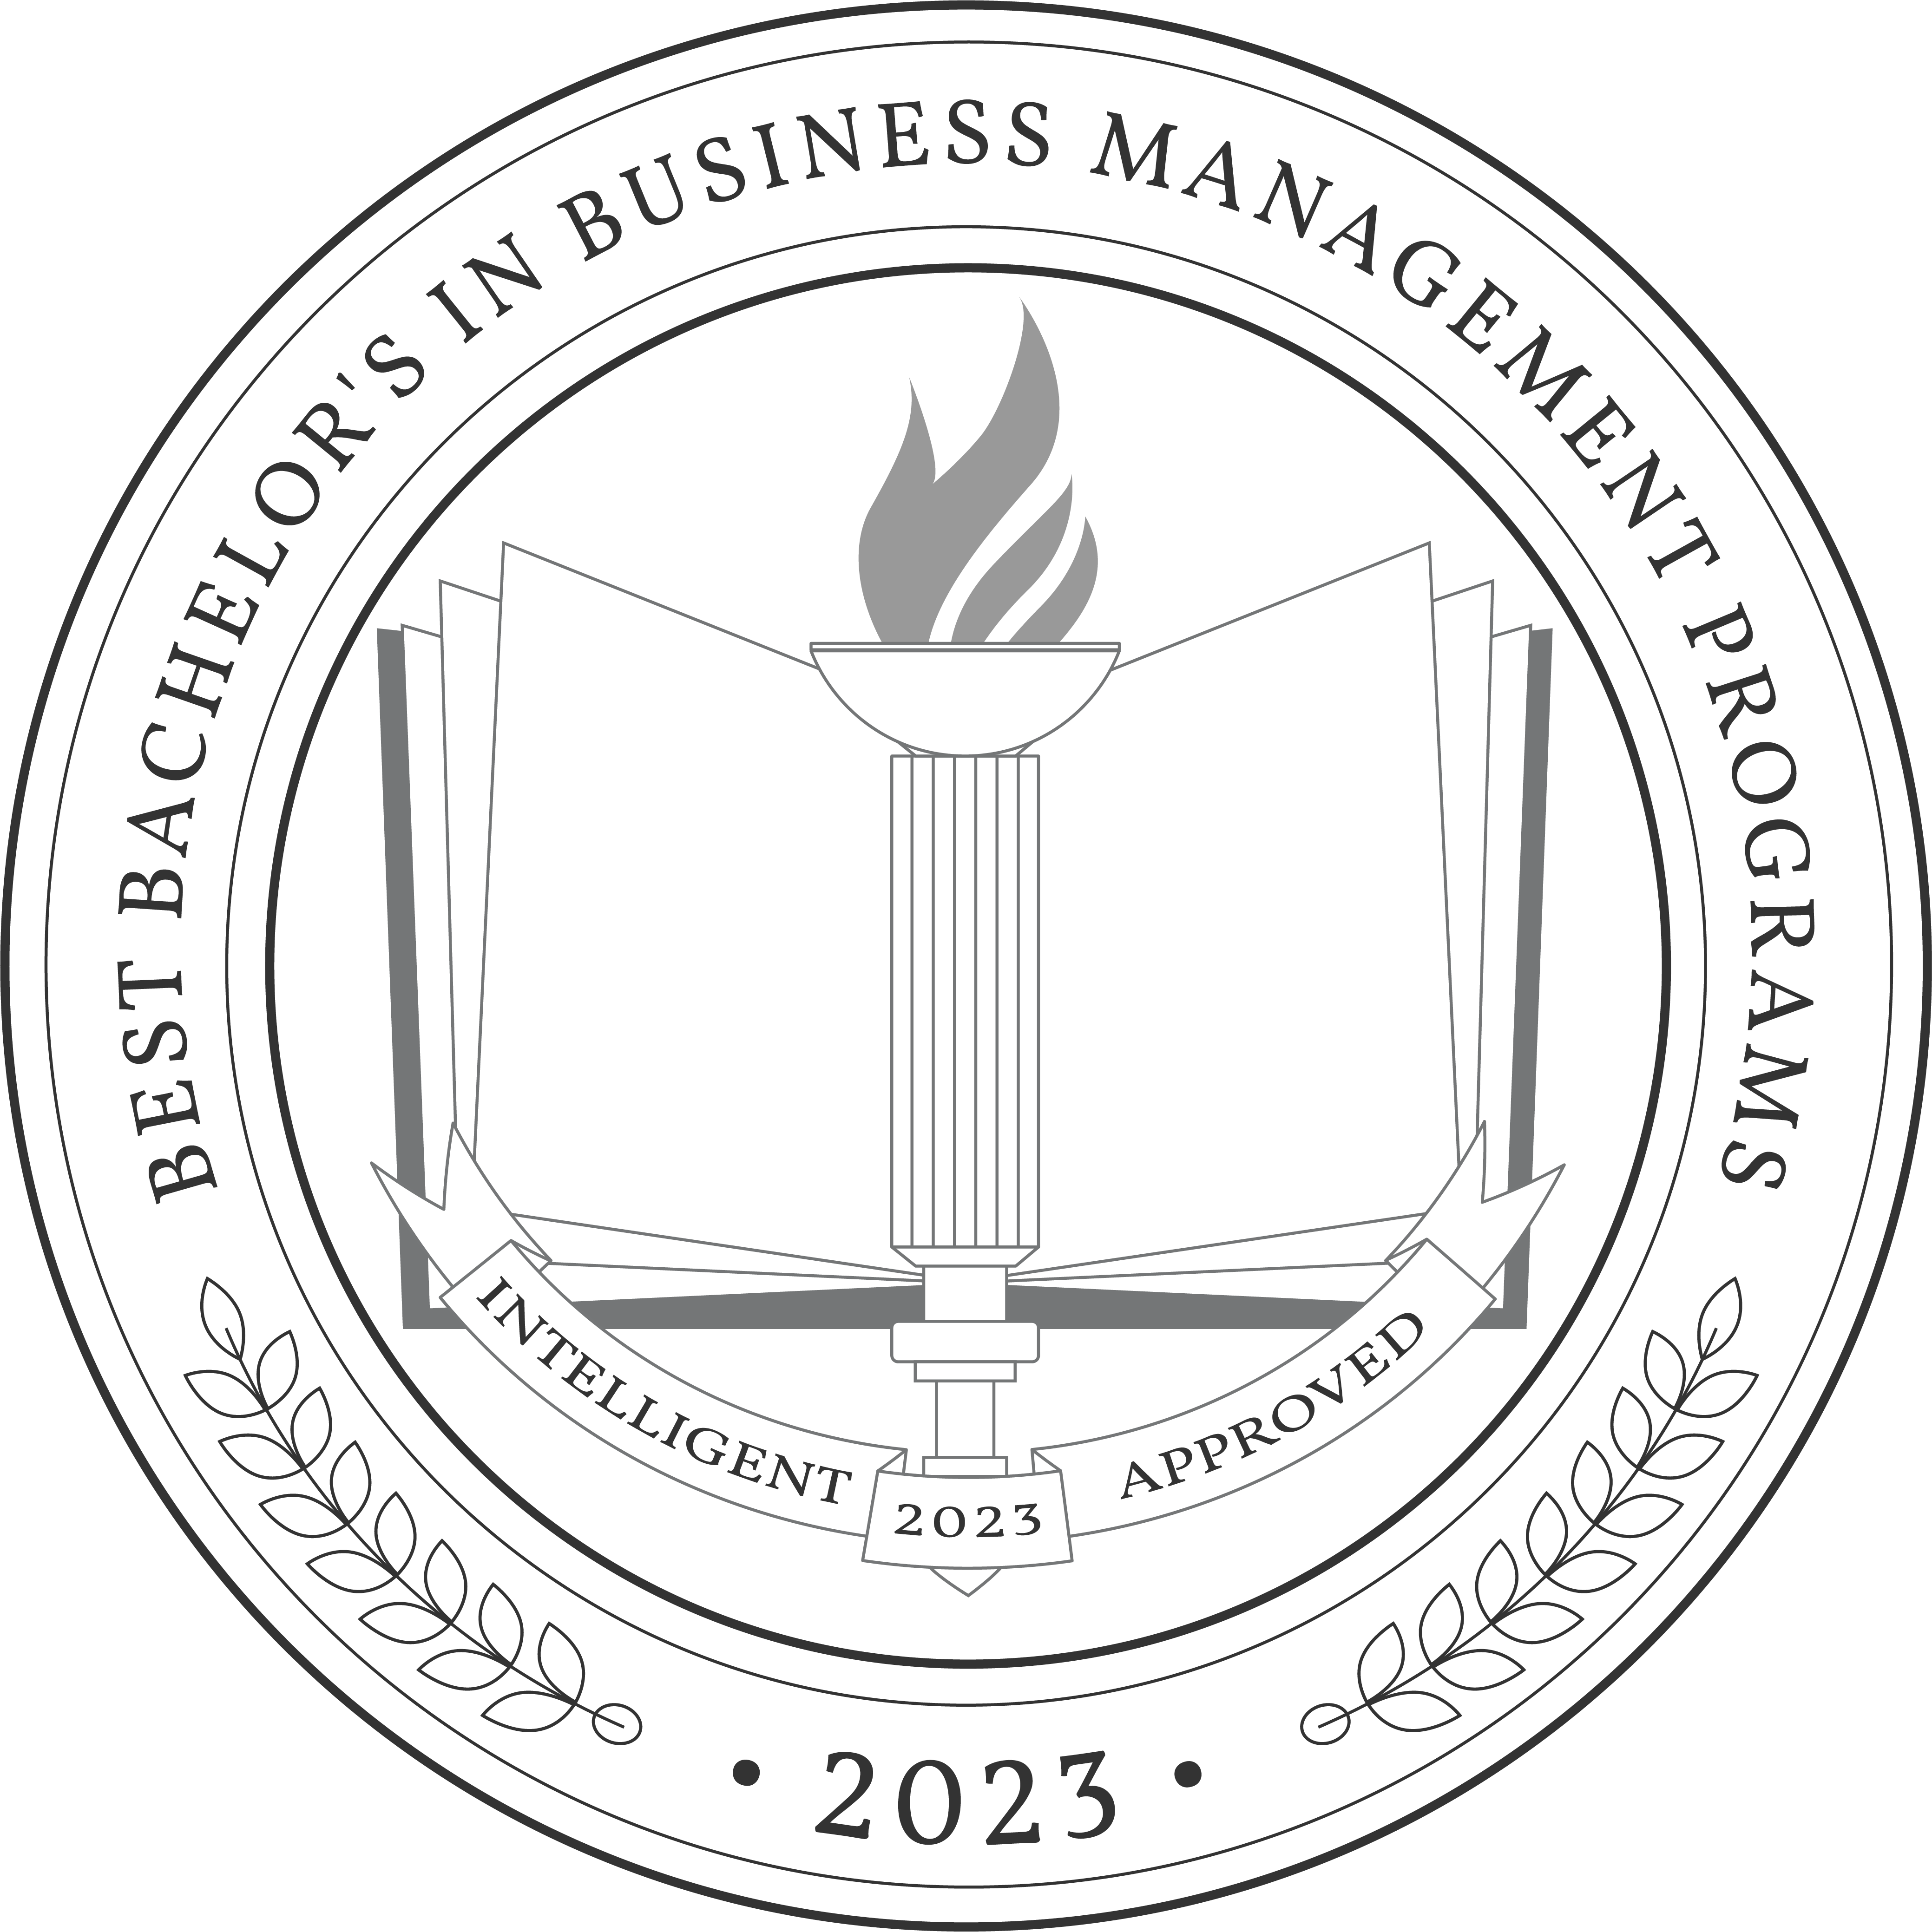 Best Bachelor's in Business Management Programs 2023